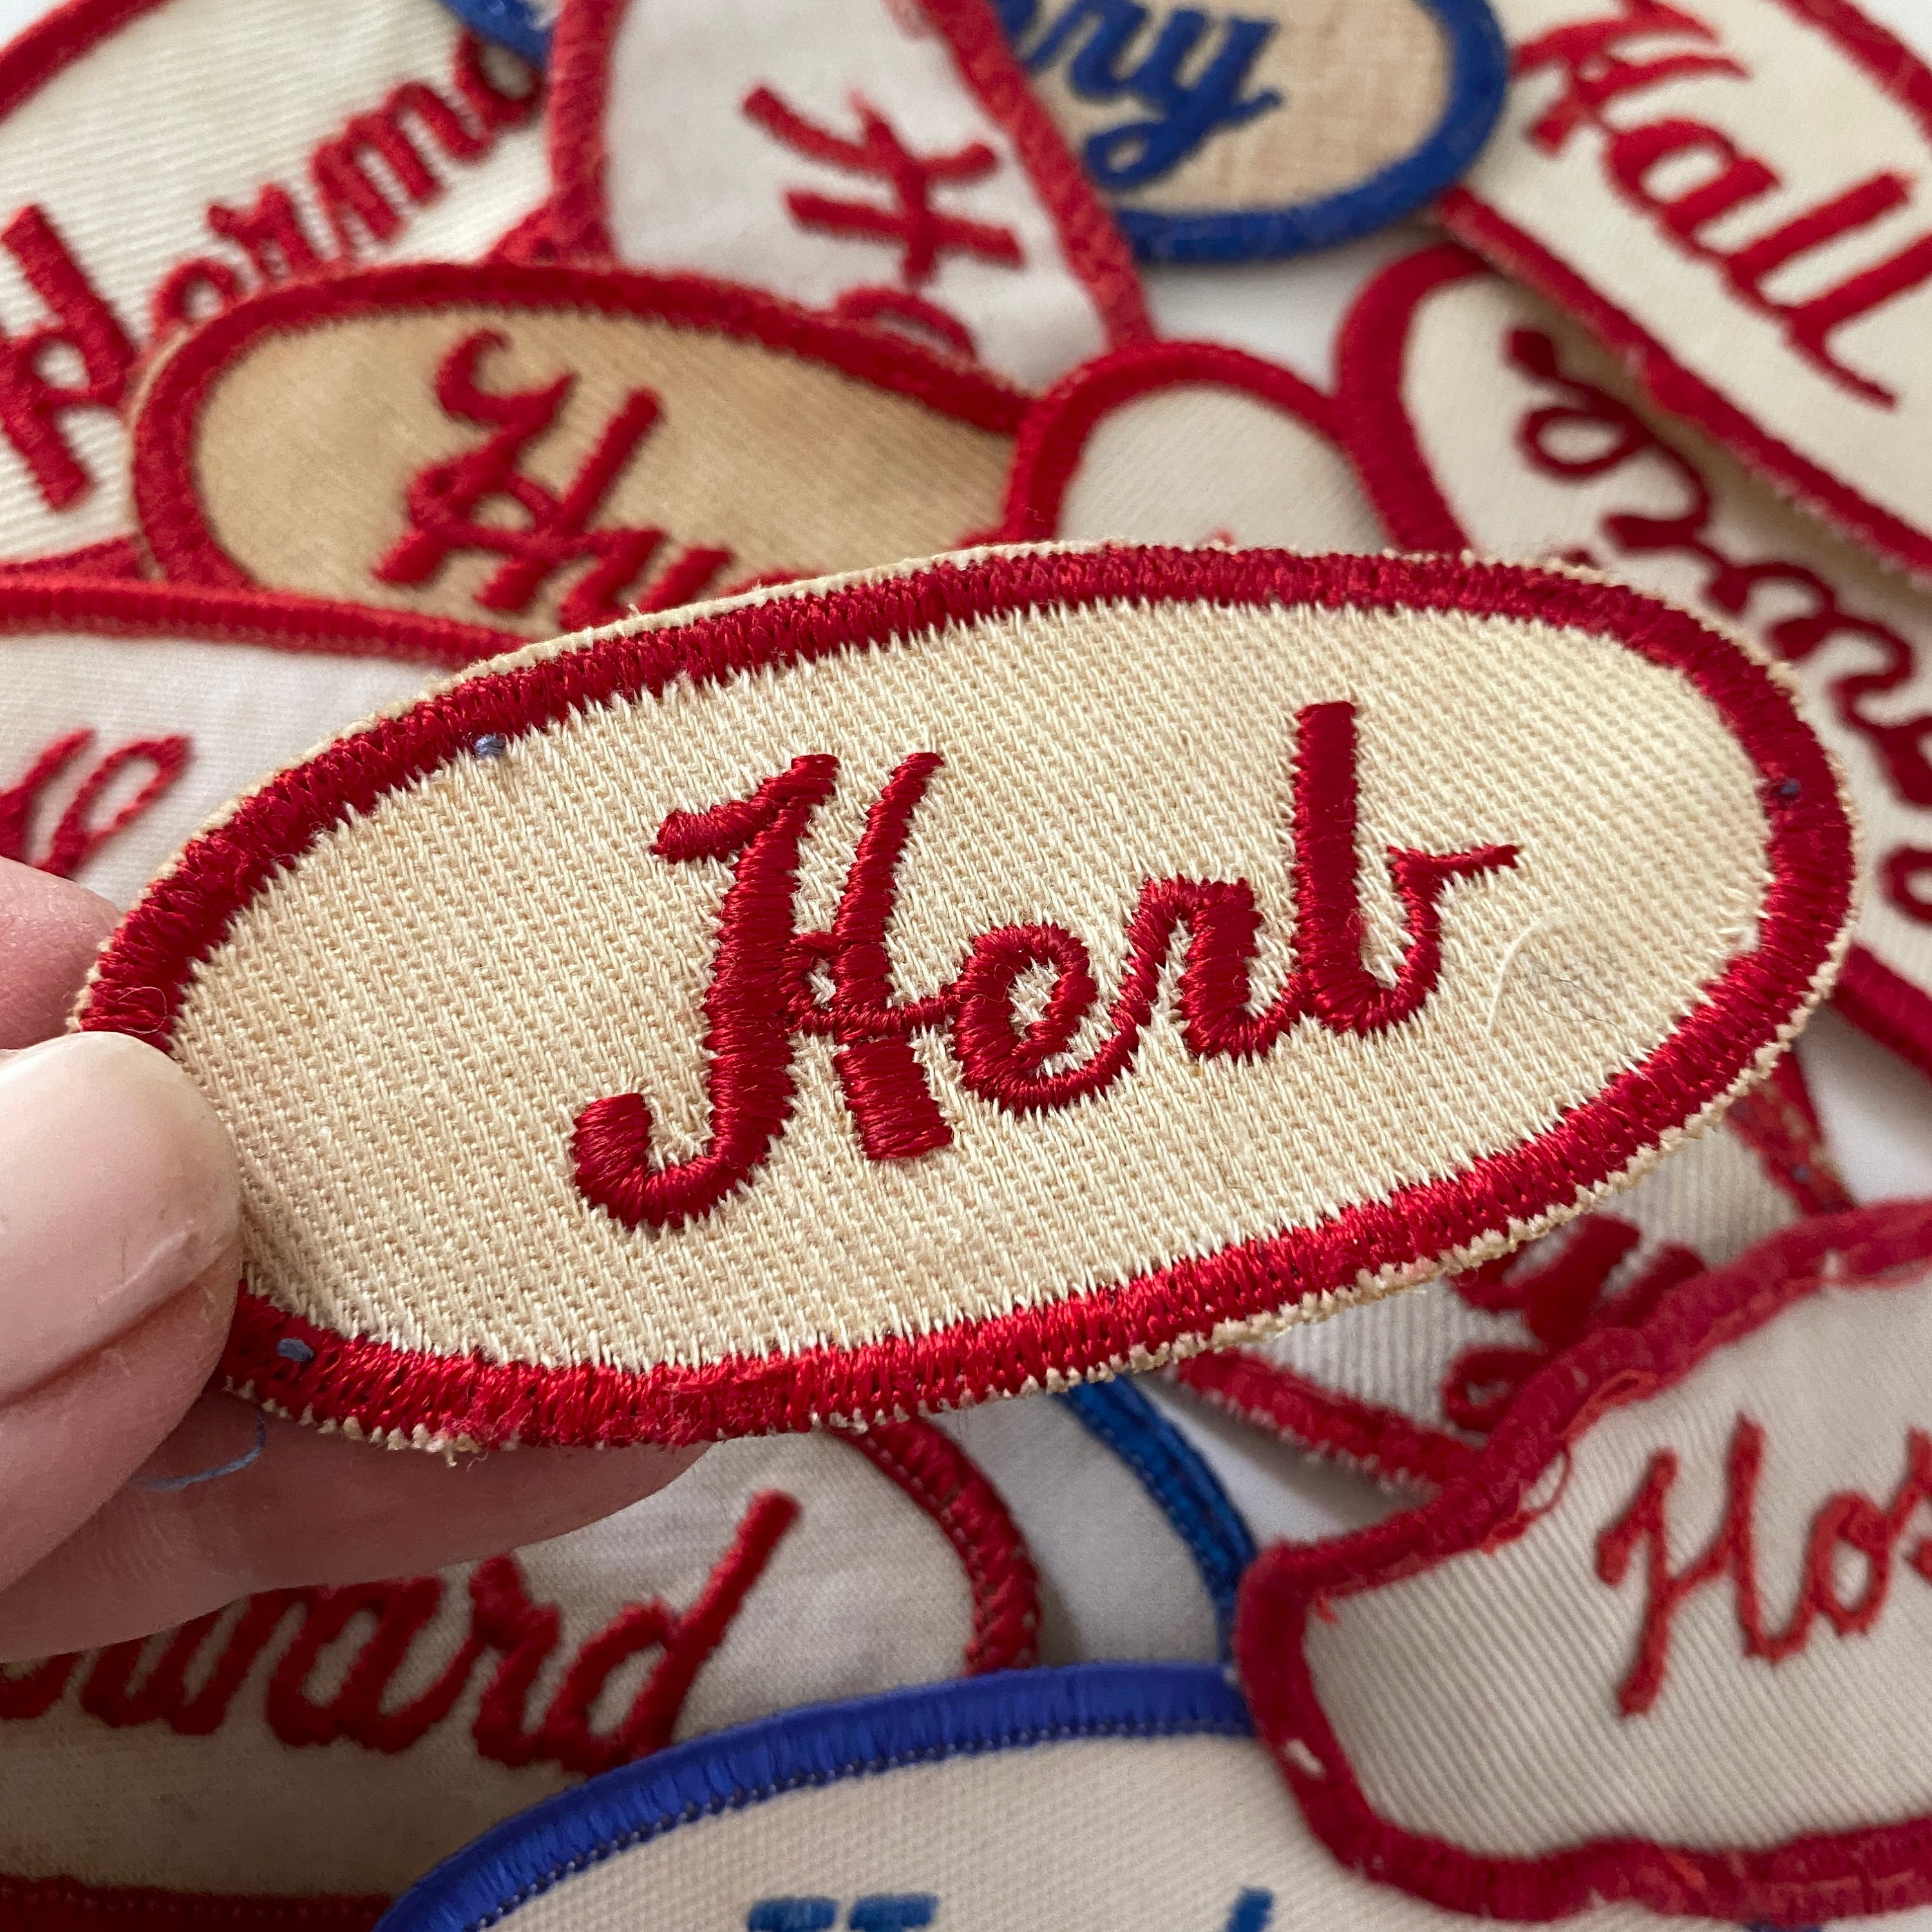 RESTOCKED Bulk Vintage Red Embroidered Oval Uniform Name Patches 25 or 50  Random Names Men's Names Industrial Work Shirt Vtg Supply 